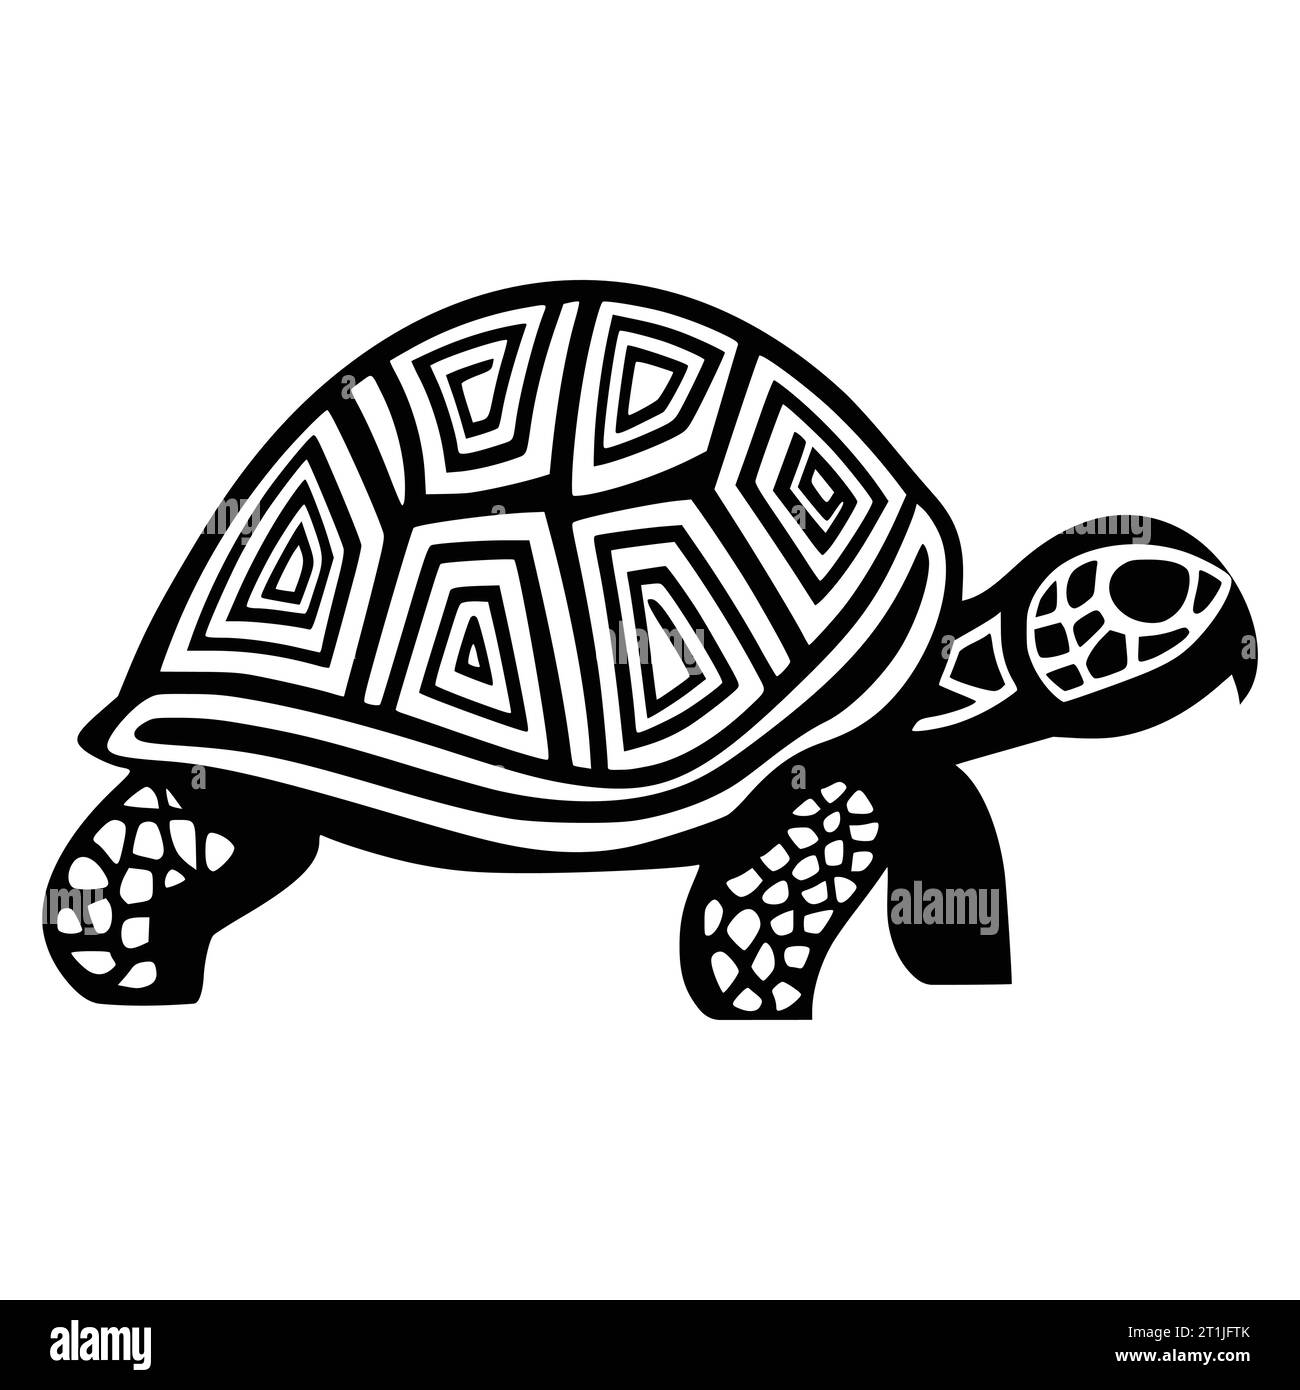 turtle amphibian wild animal head illustration for logo or symbol Stock Vector